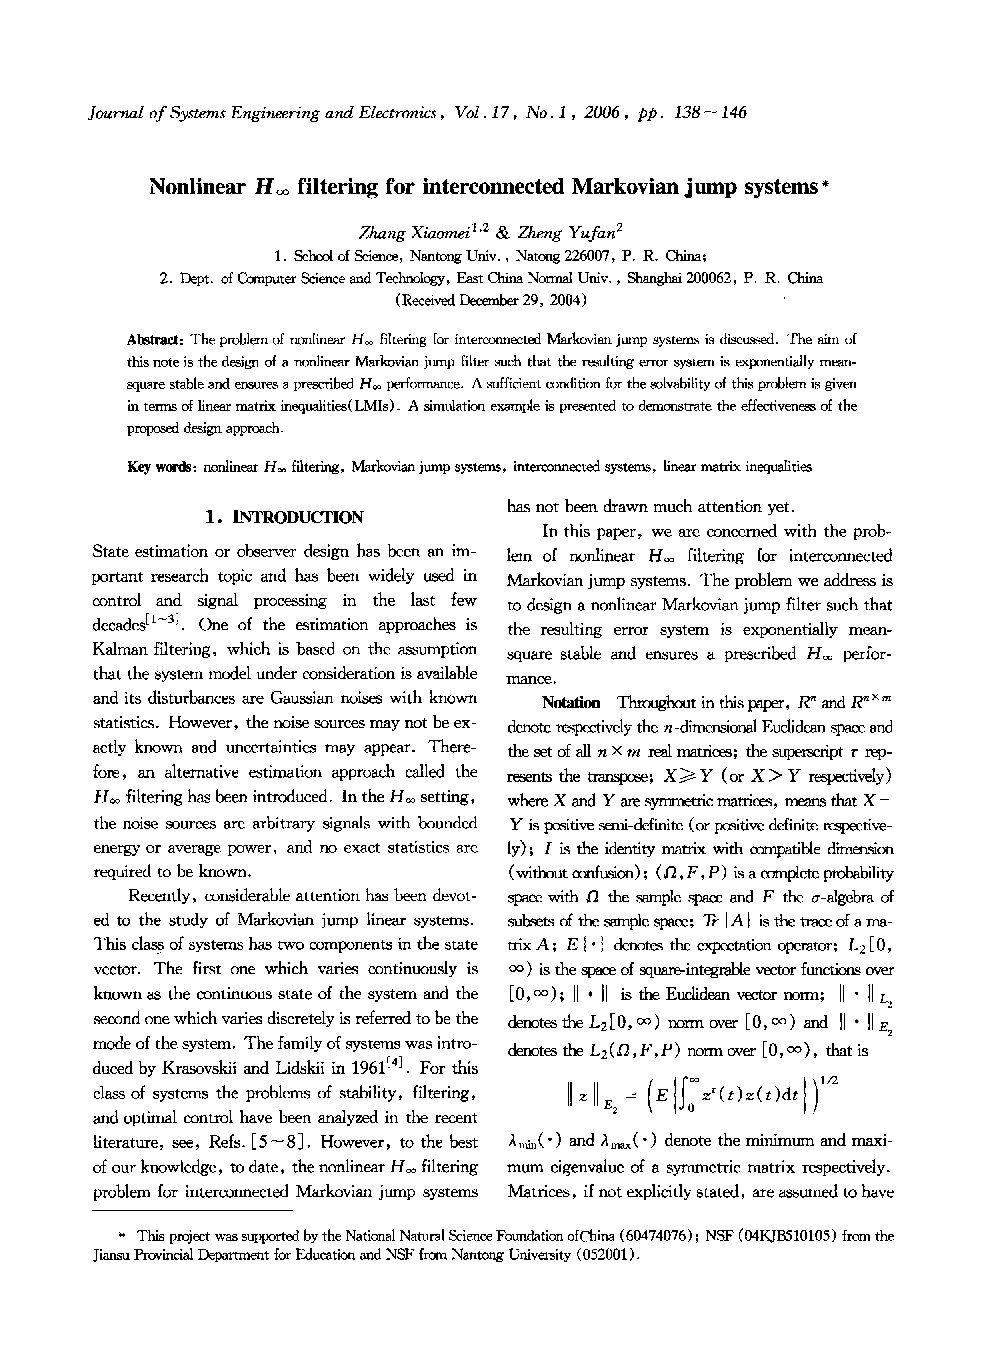 Nonlinear Hâ filtering for interconnected Markovian jump systems1
		